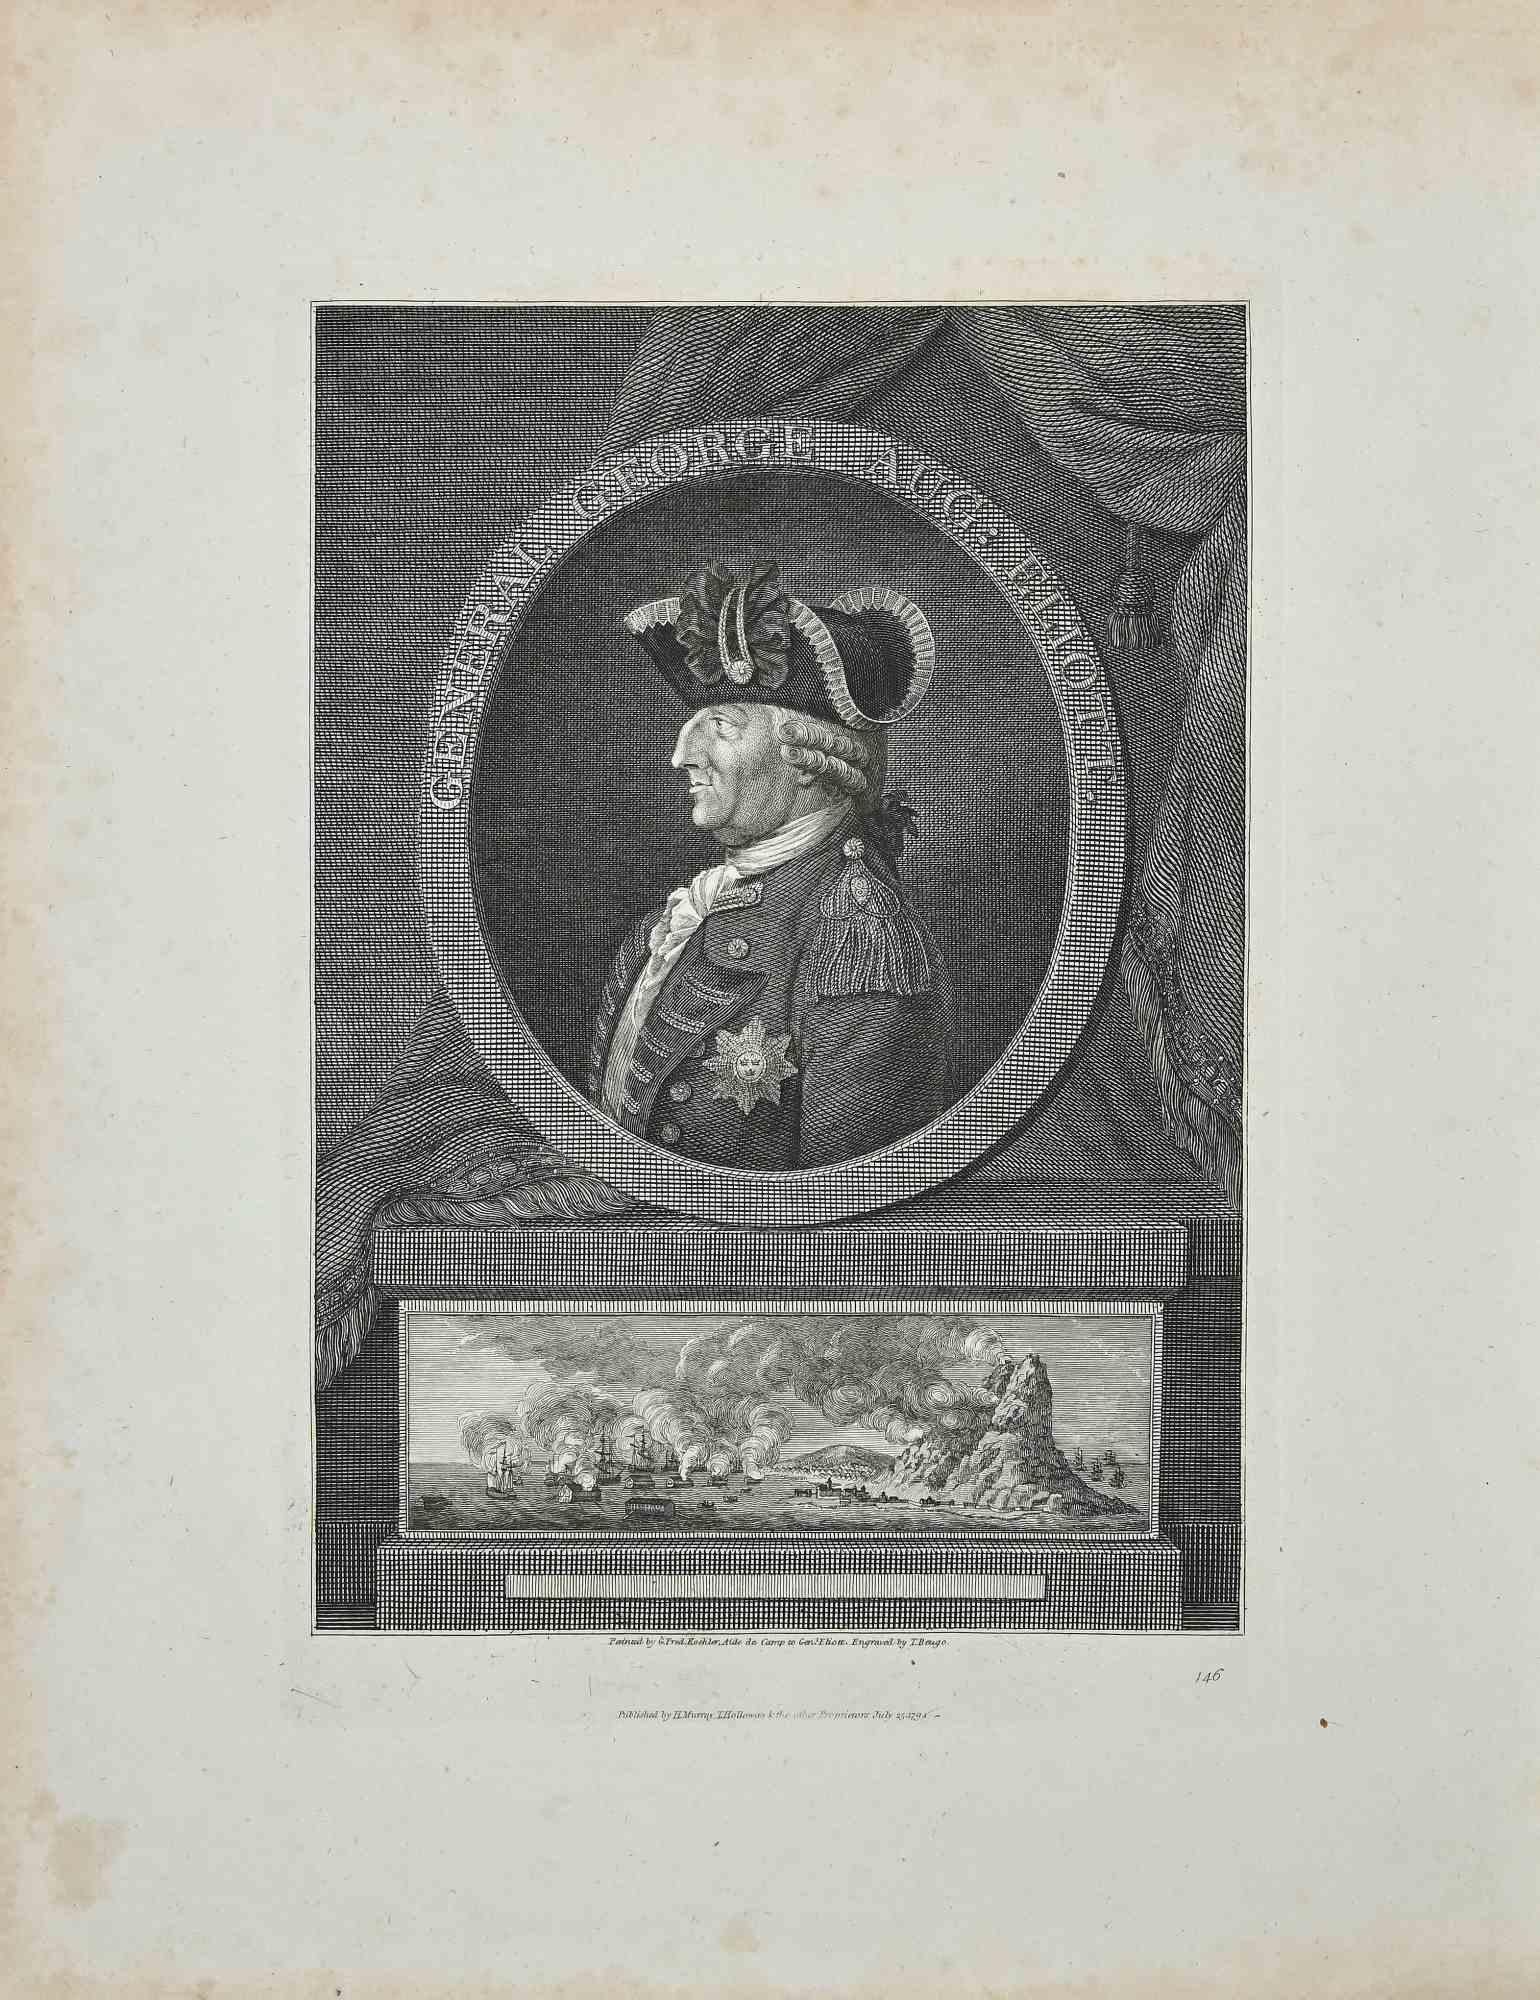 Portrait of George Aug. Eliott - Original Etching by Thomas Holloway - 1810